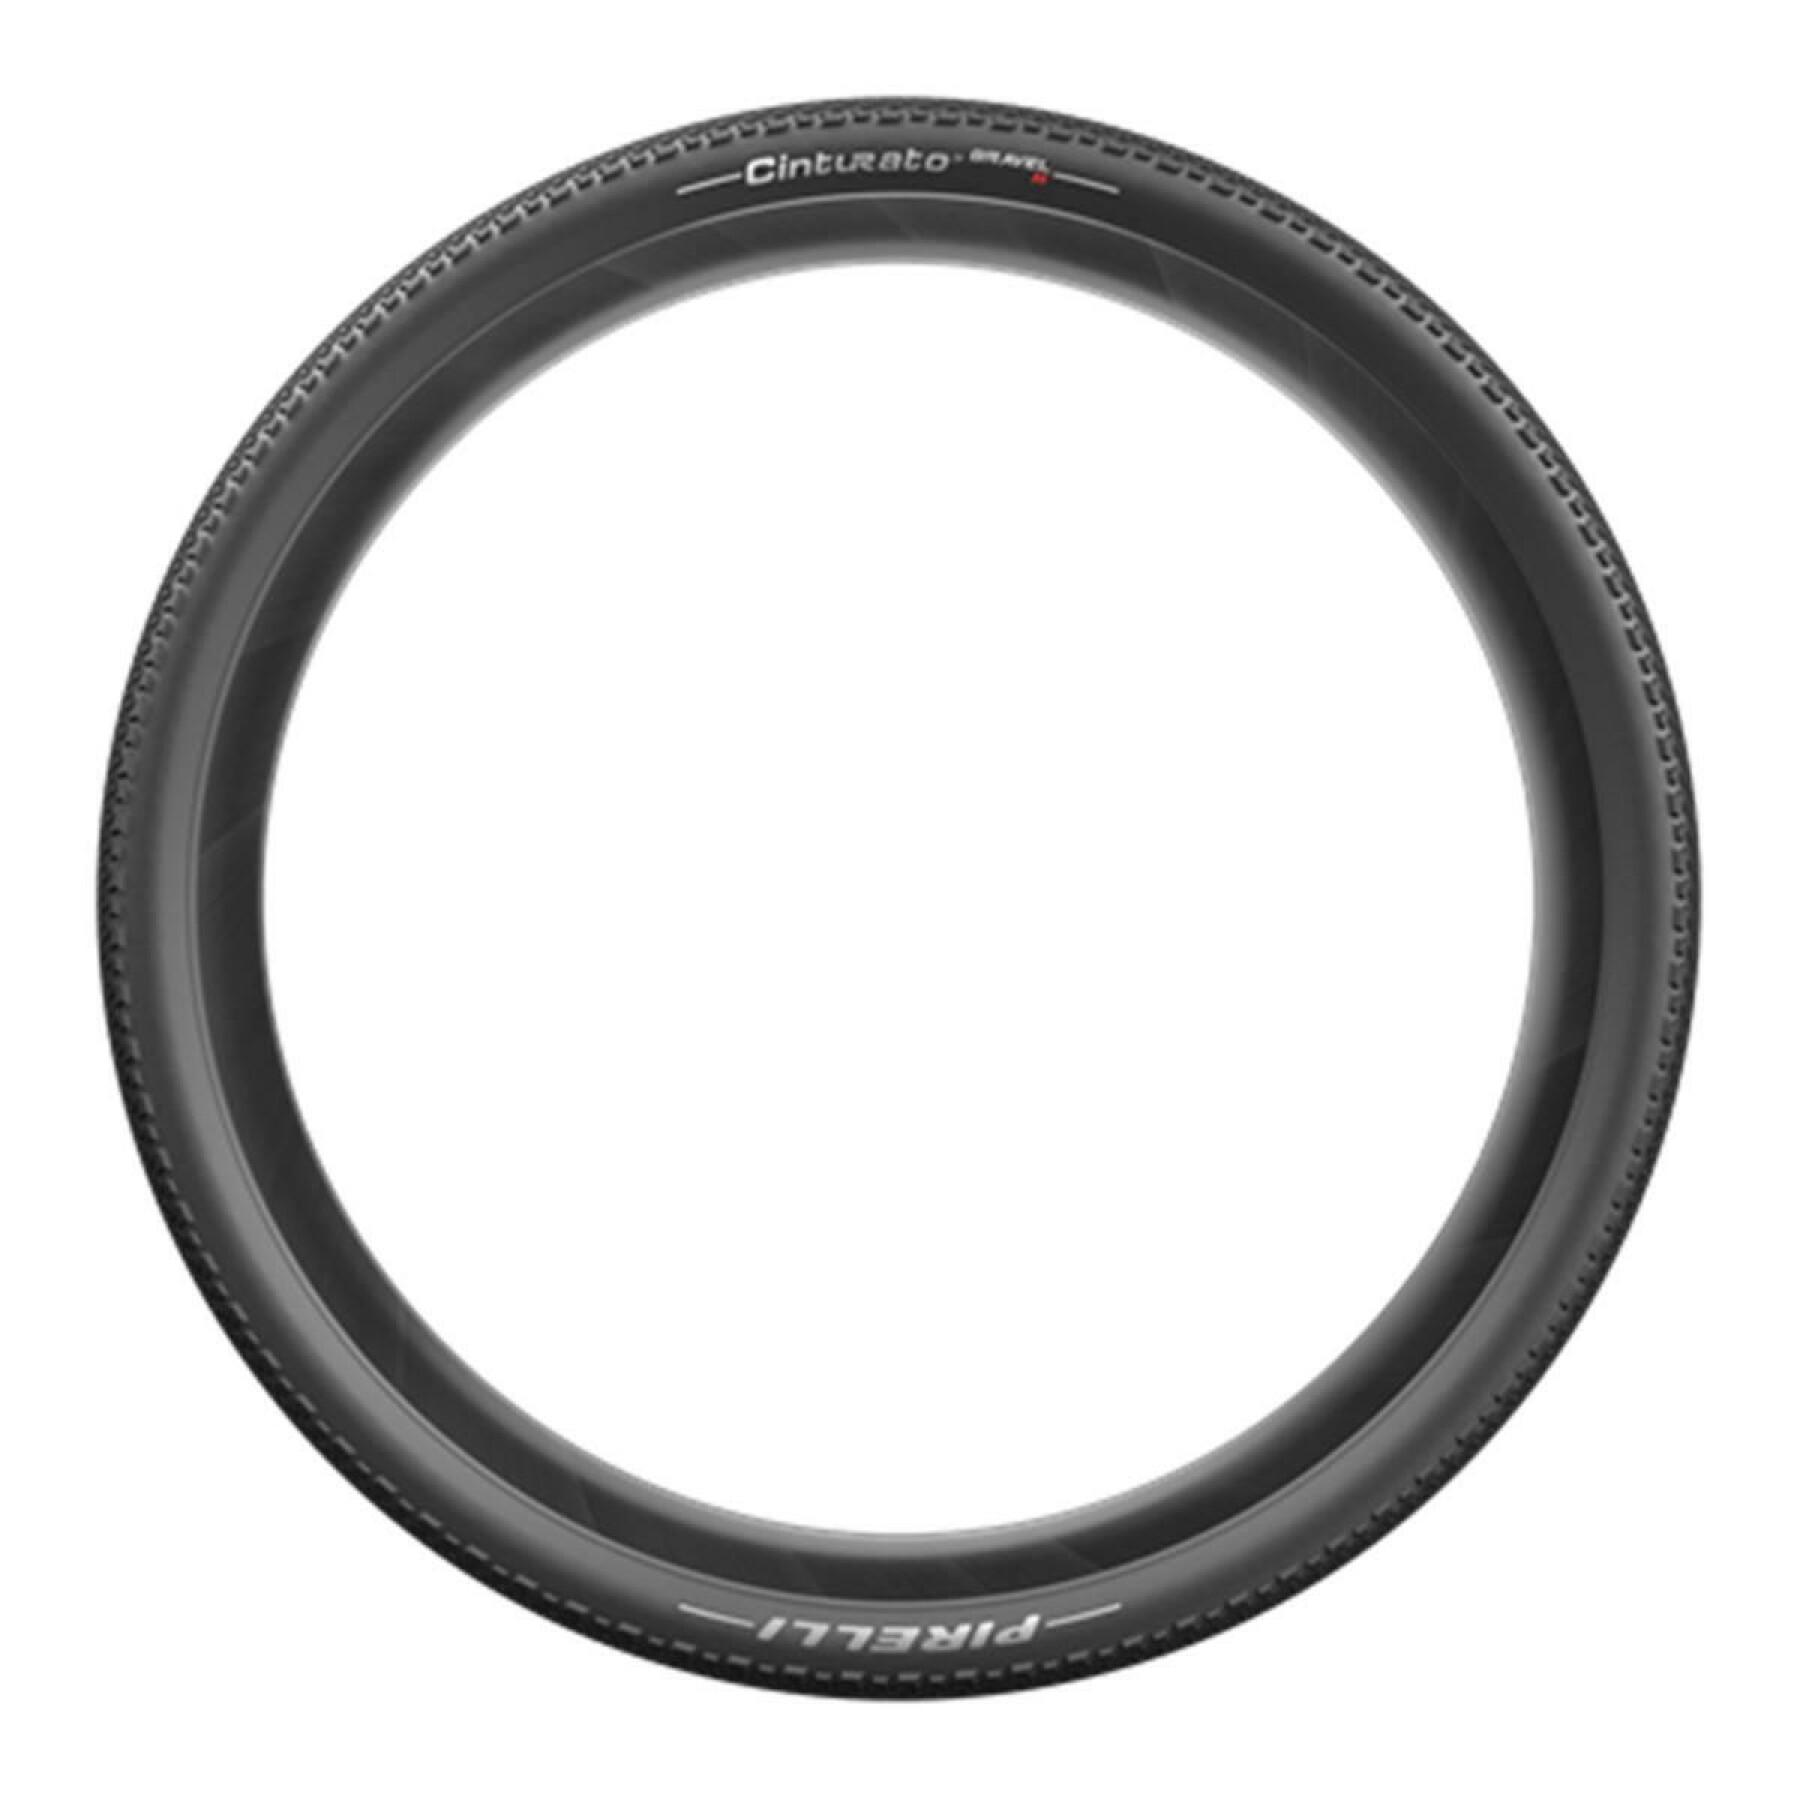 Neumático de grava Pirelli Cinturato Hard Tlr